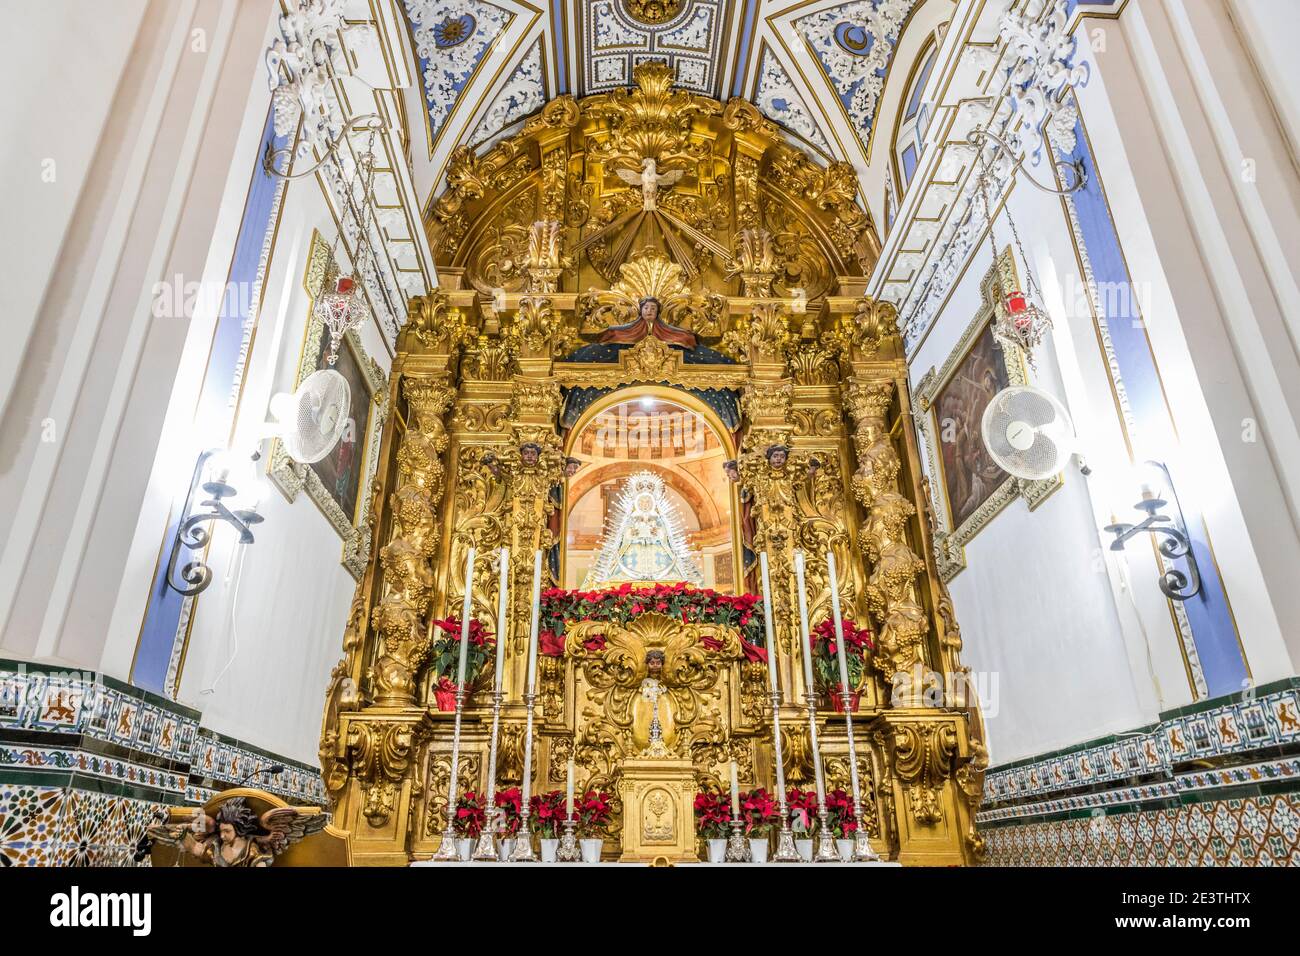 Lora del Rio, Spain. The Shrine of Setefilla, a Roman Catholic hermitage, home to a sculpture called the Virgen de Setefilla (Our Lady of Setefilla) Stock Photo